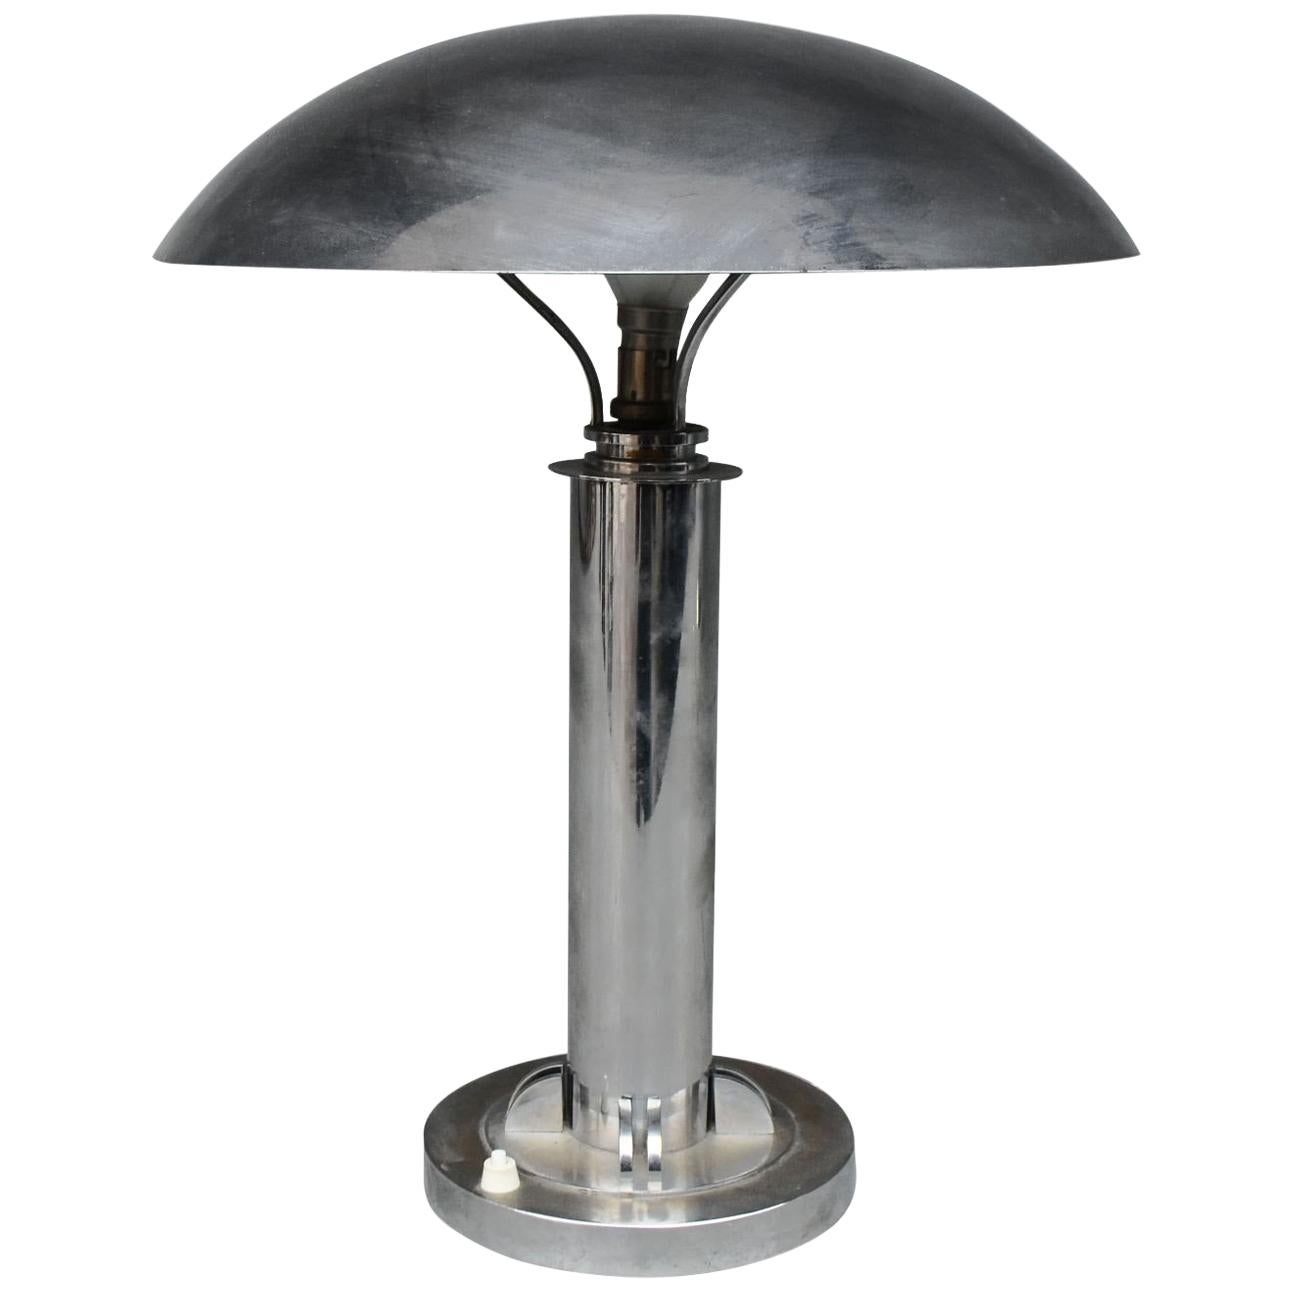 Art Deco 1930 Pilz verchromte Metall-Schreibtischlampe